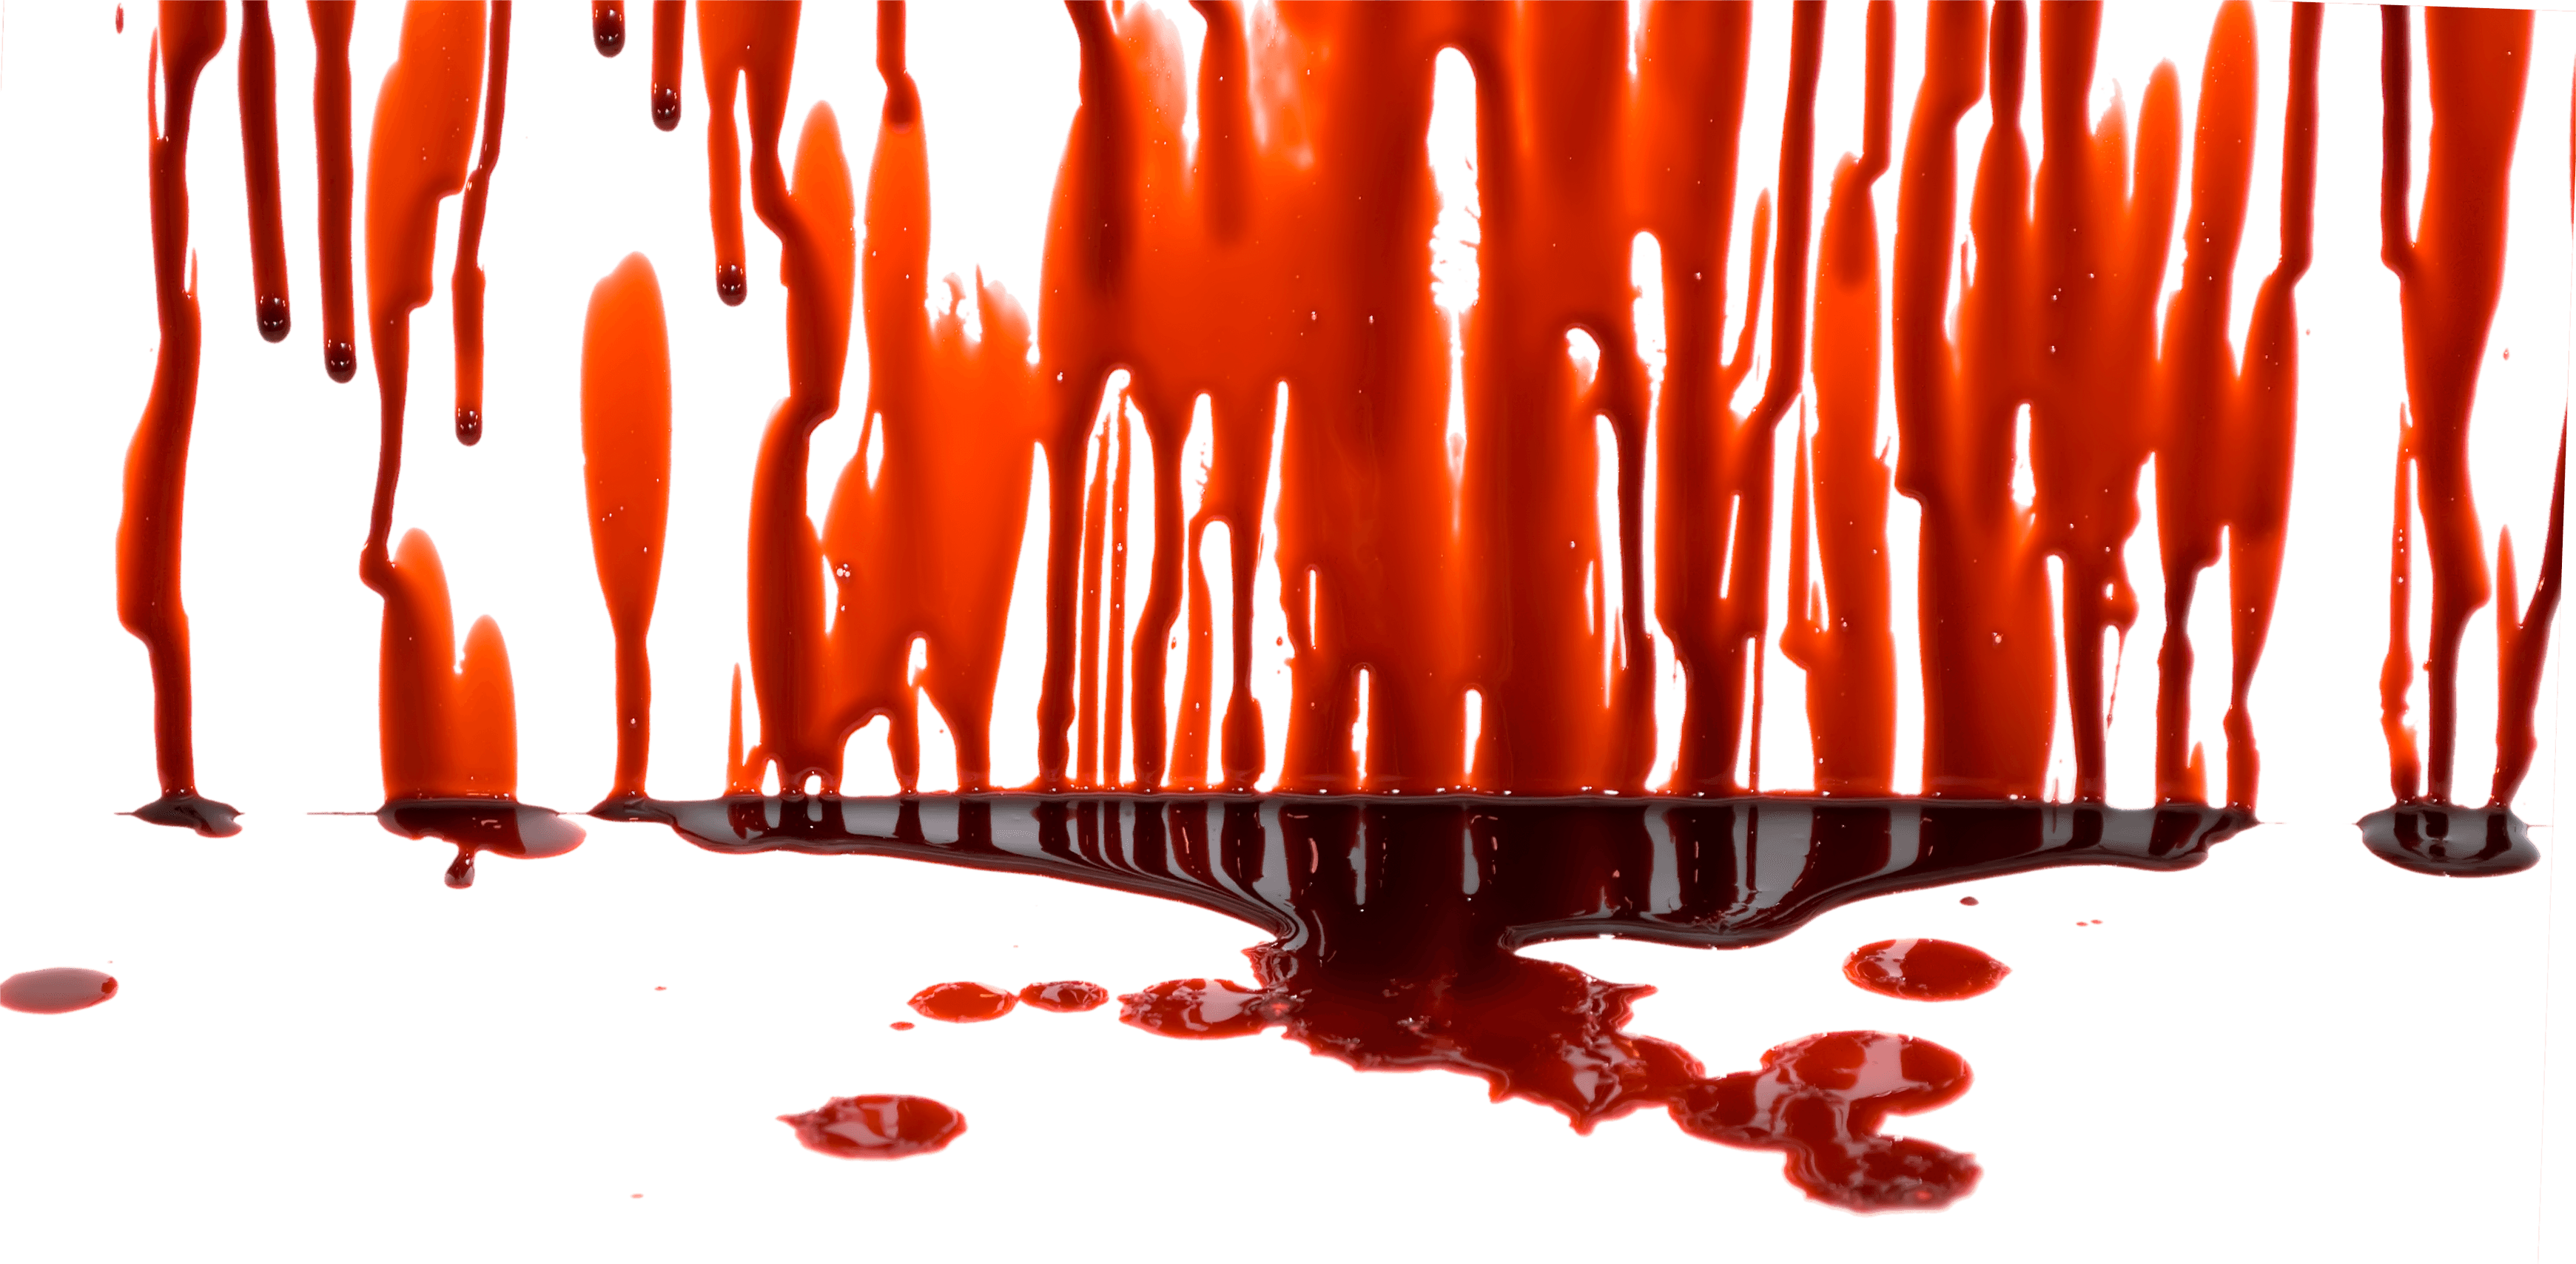 Blood Wallpaper.